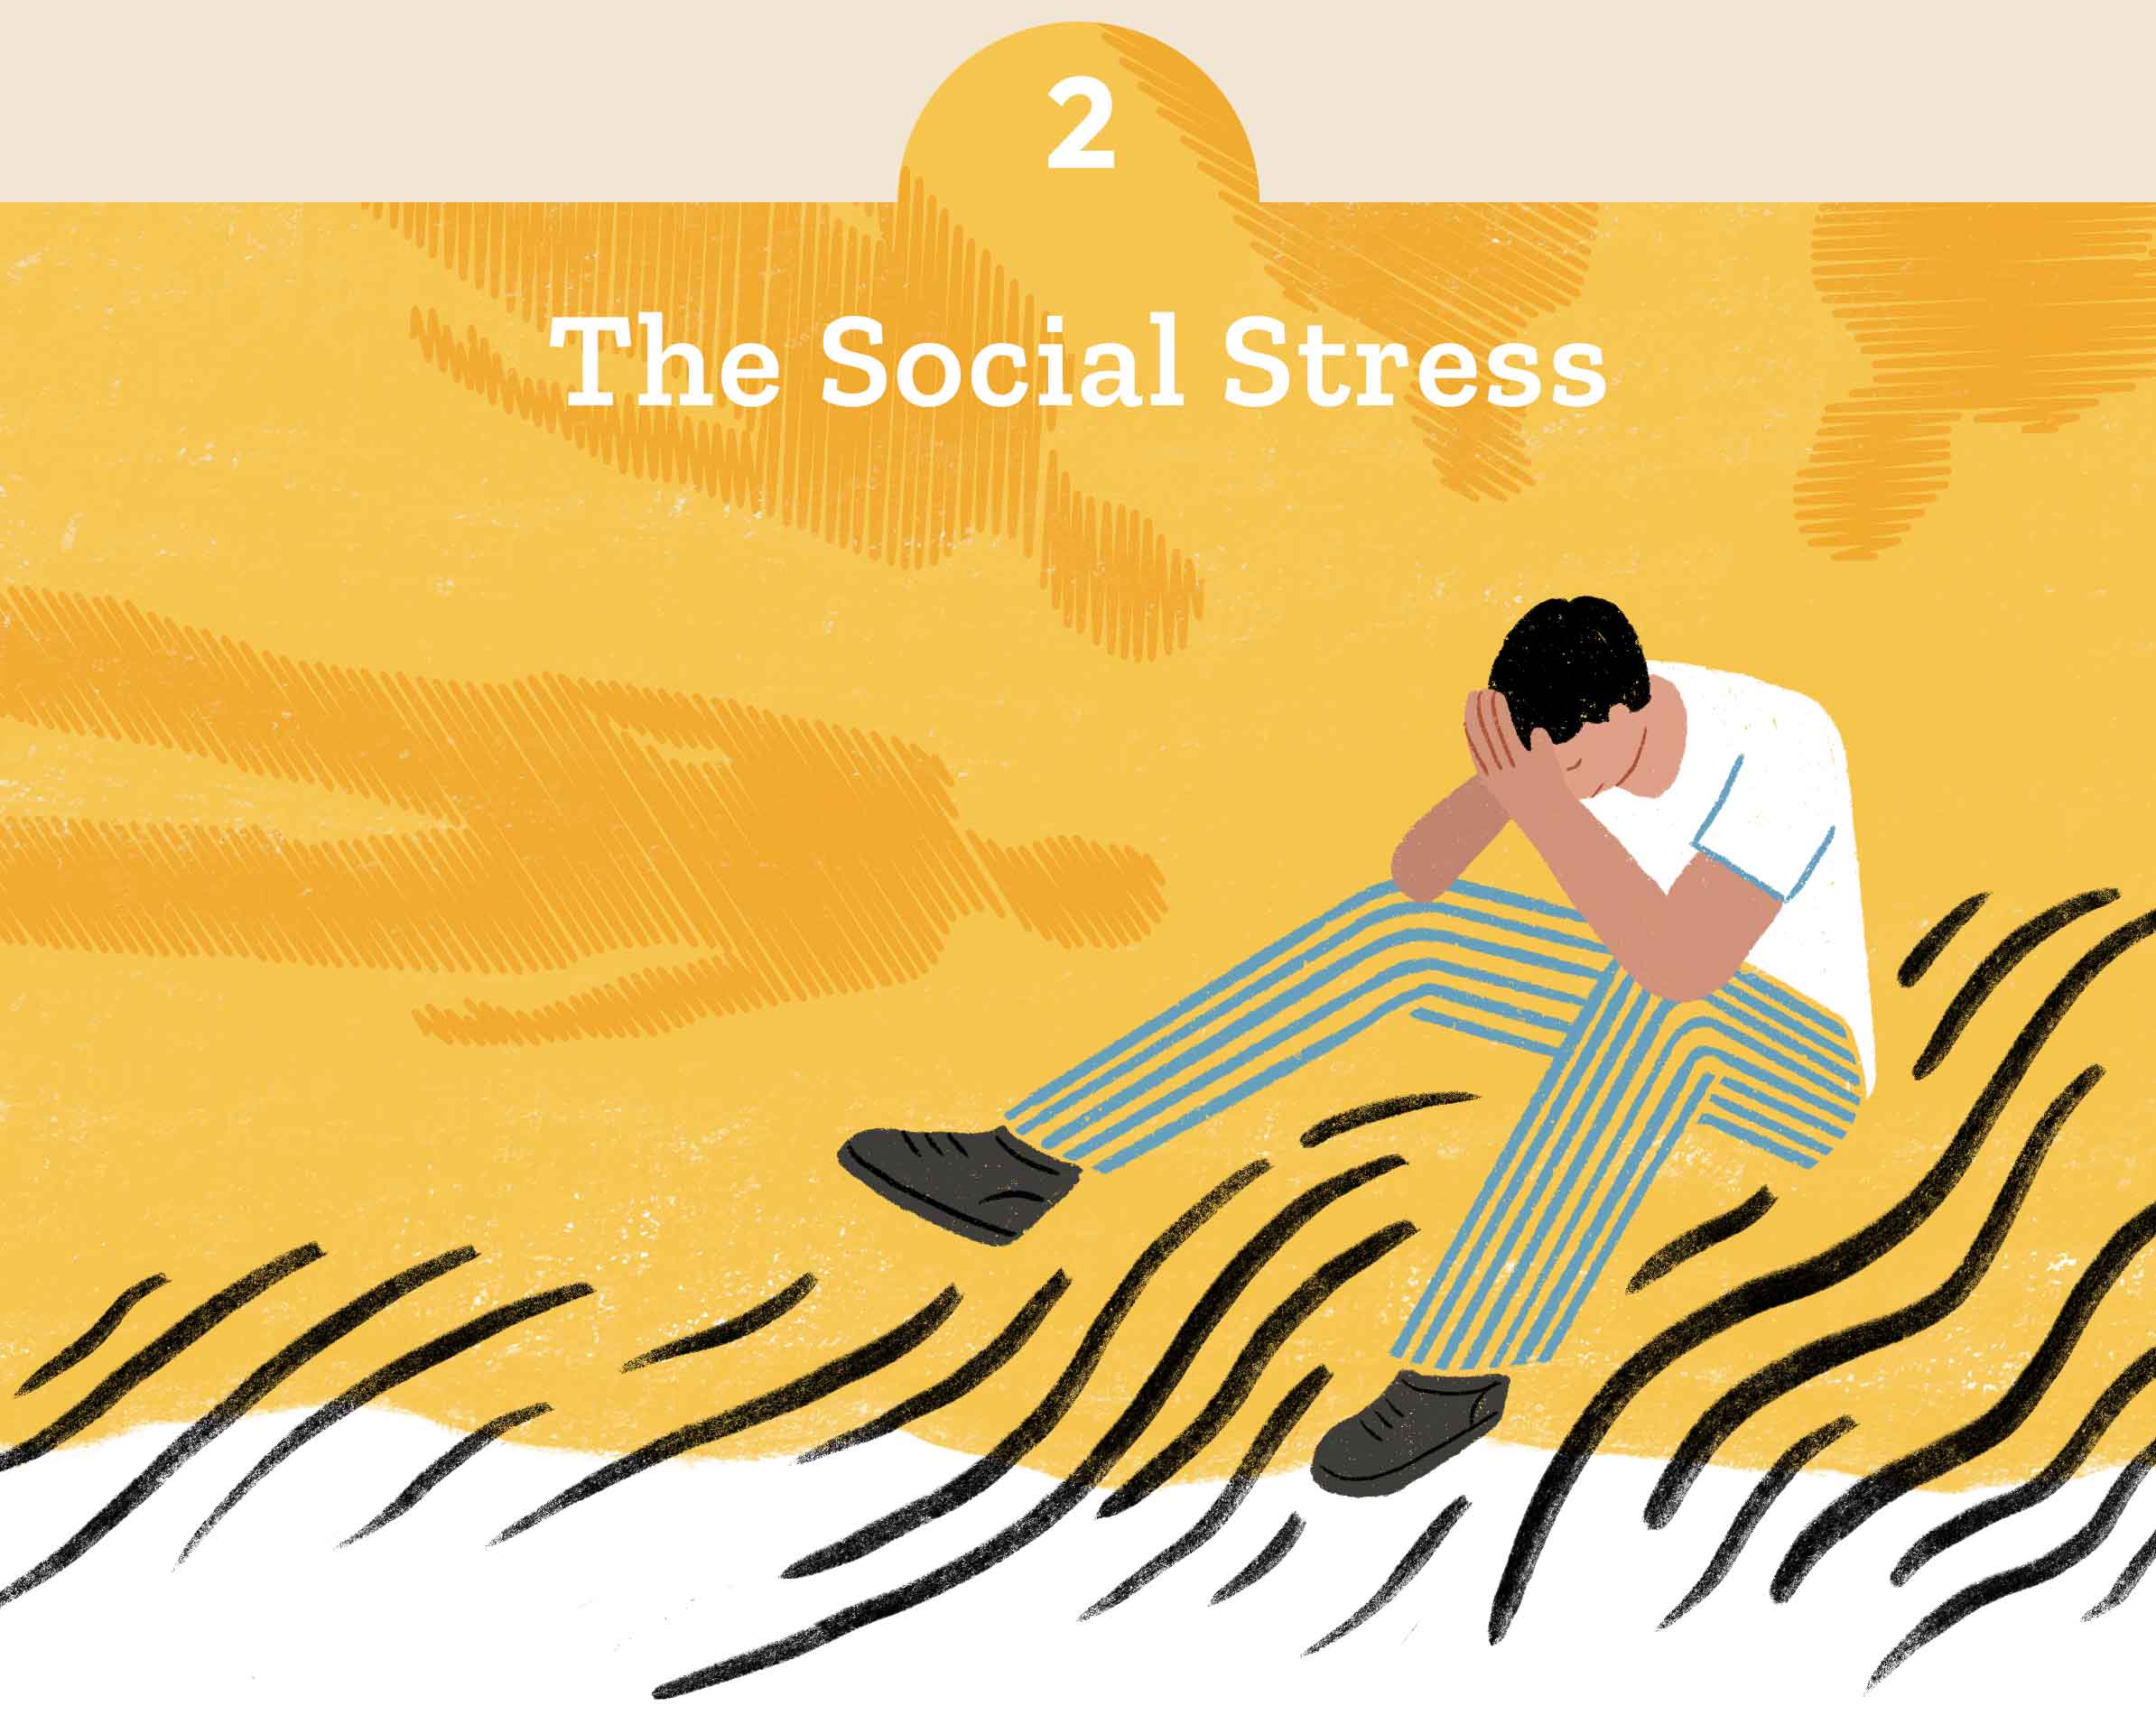 2. The Social Stress